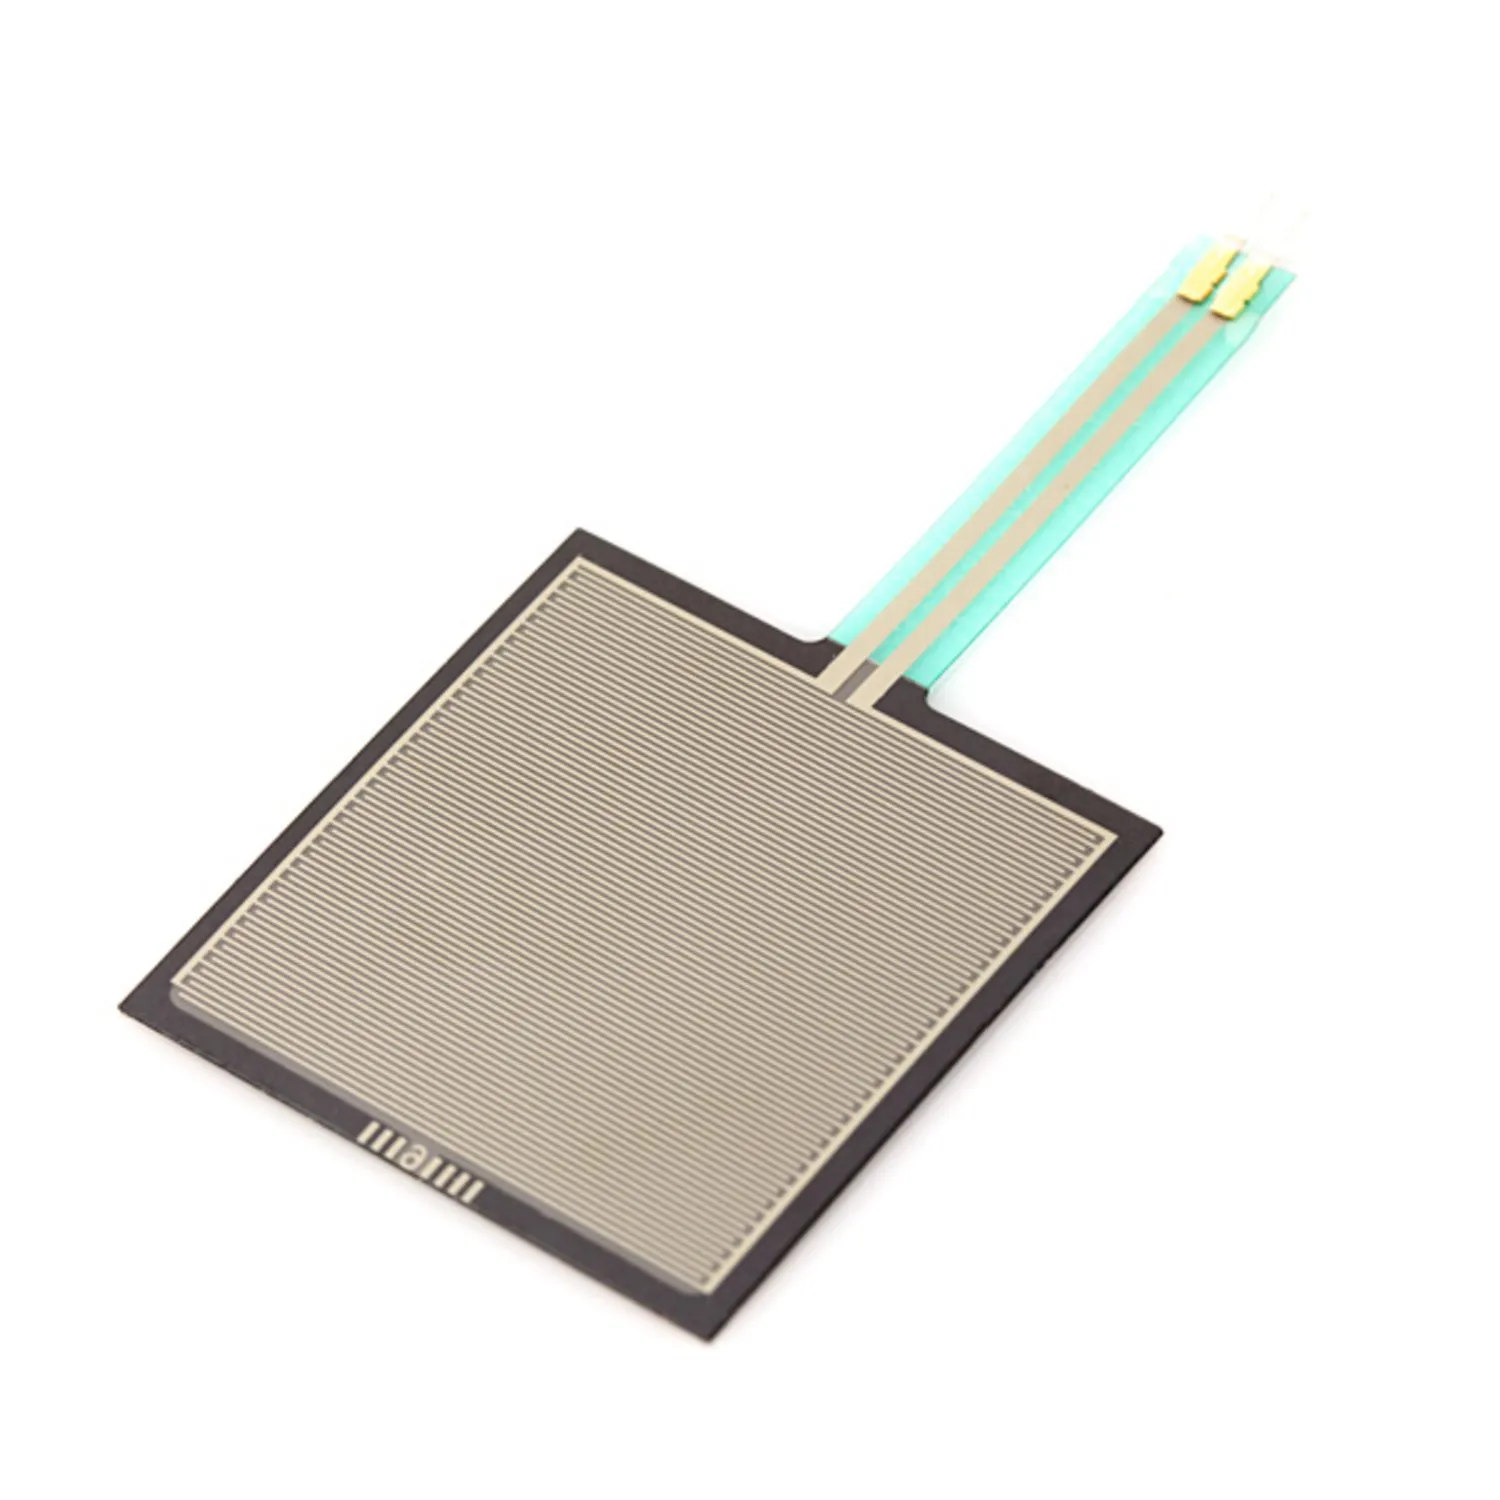 Photo of Force Sensitive Resistor - Square